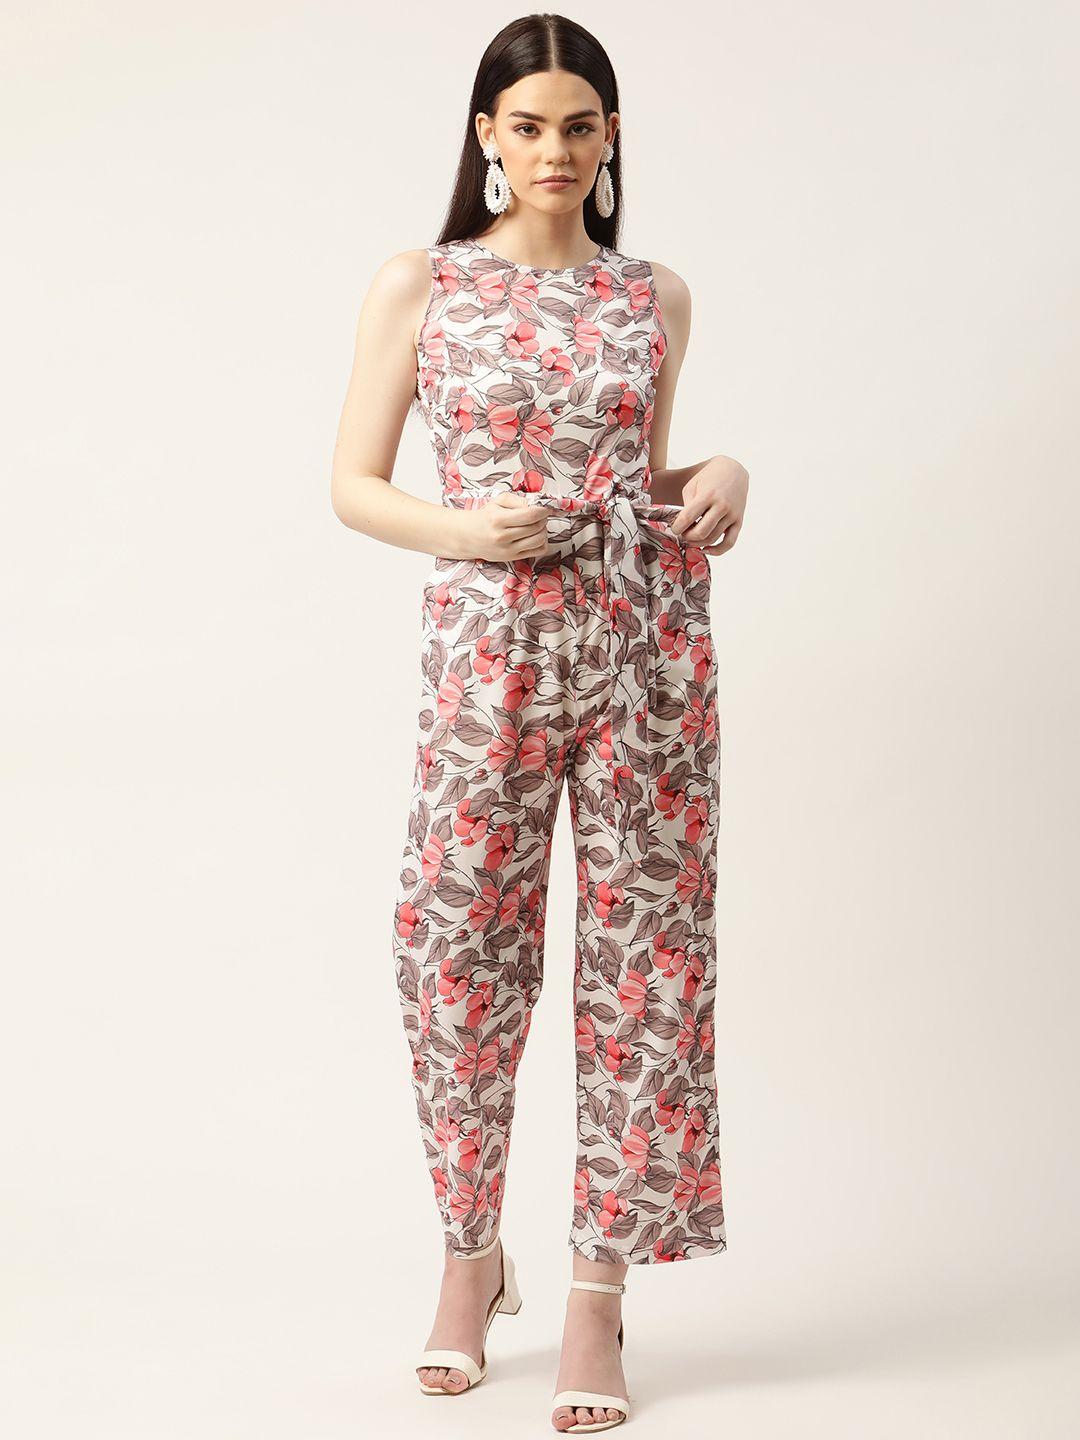 sleek-italia-off-white-&-peach-coloured-floral-printed-basic-jumpsuit-with-waist-tie-ups